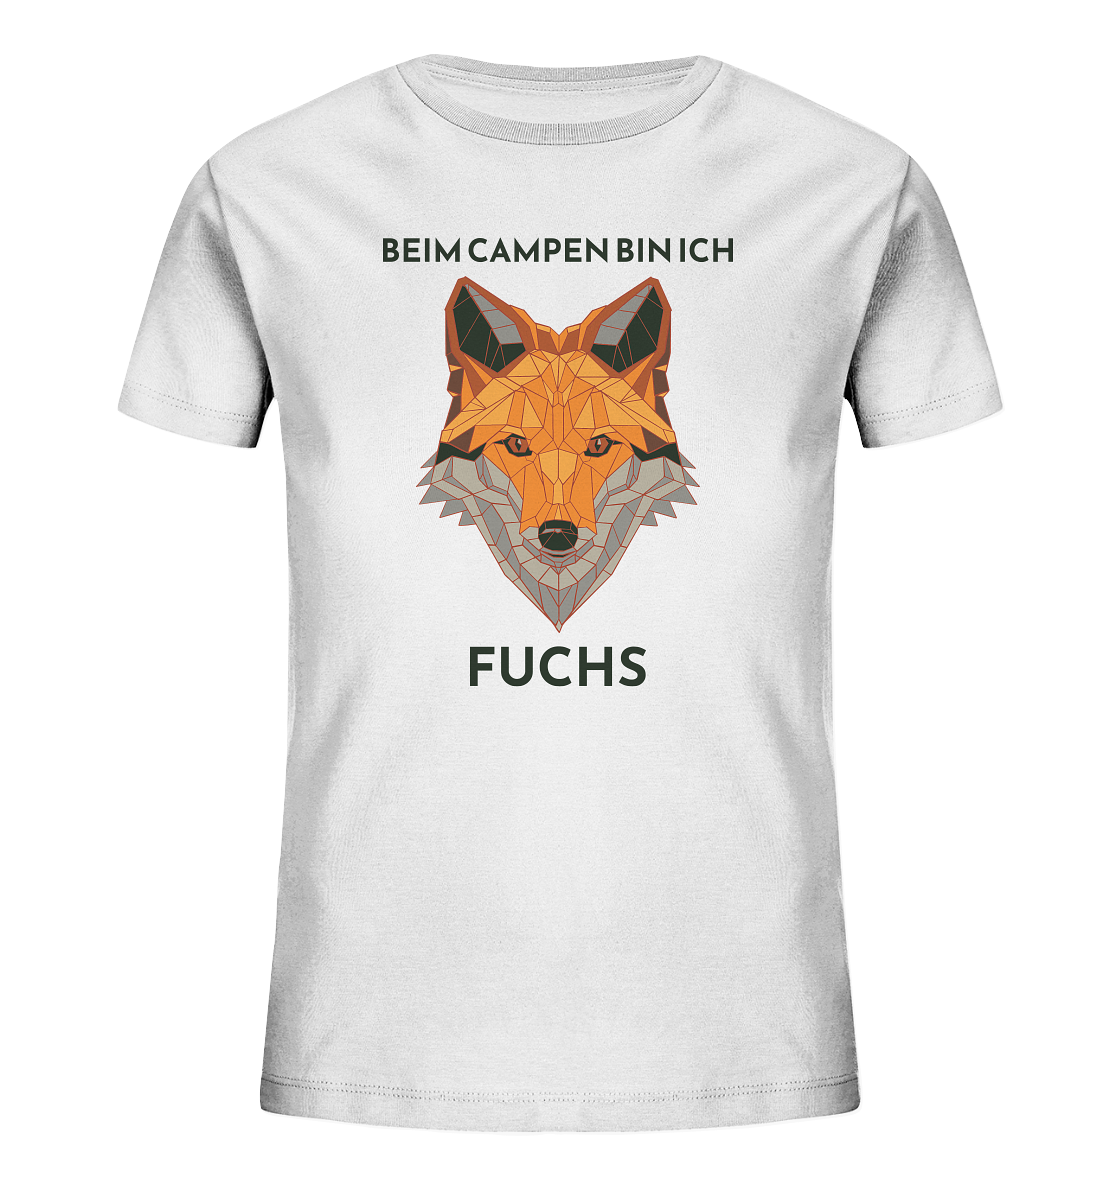 Beim Campen bin ich Fuchs - Kids Organic Shirt